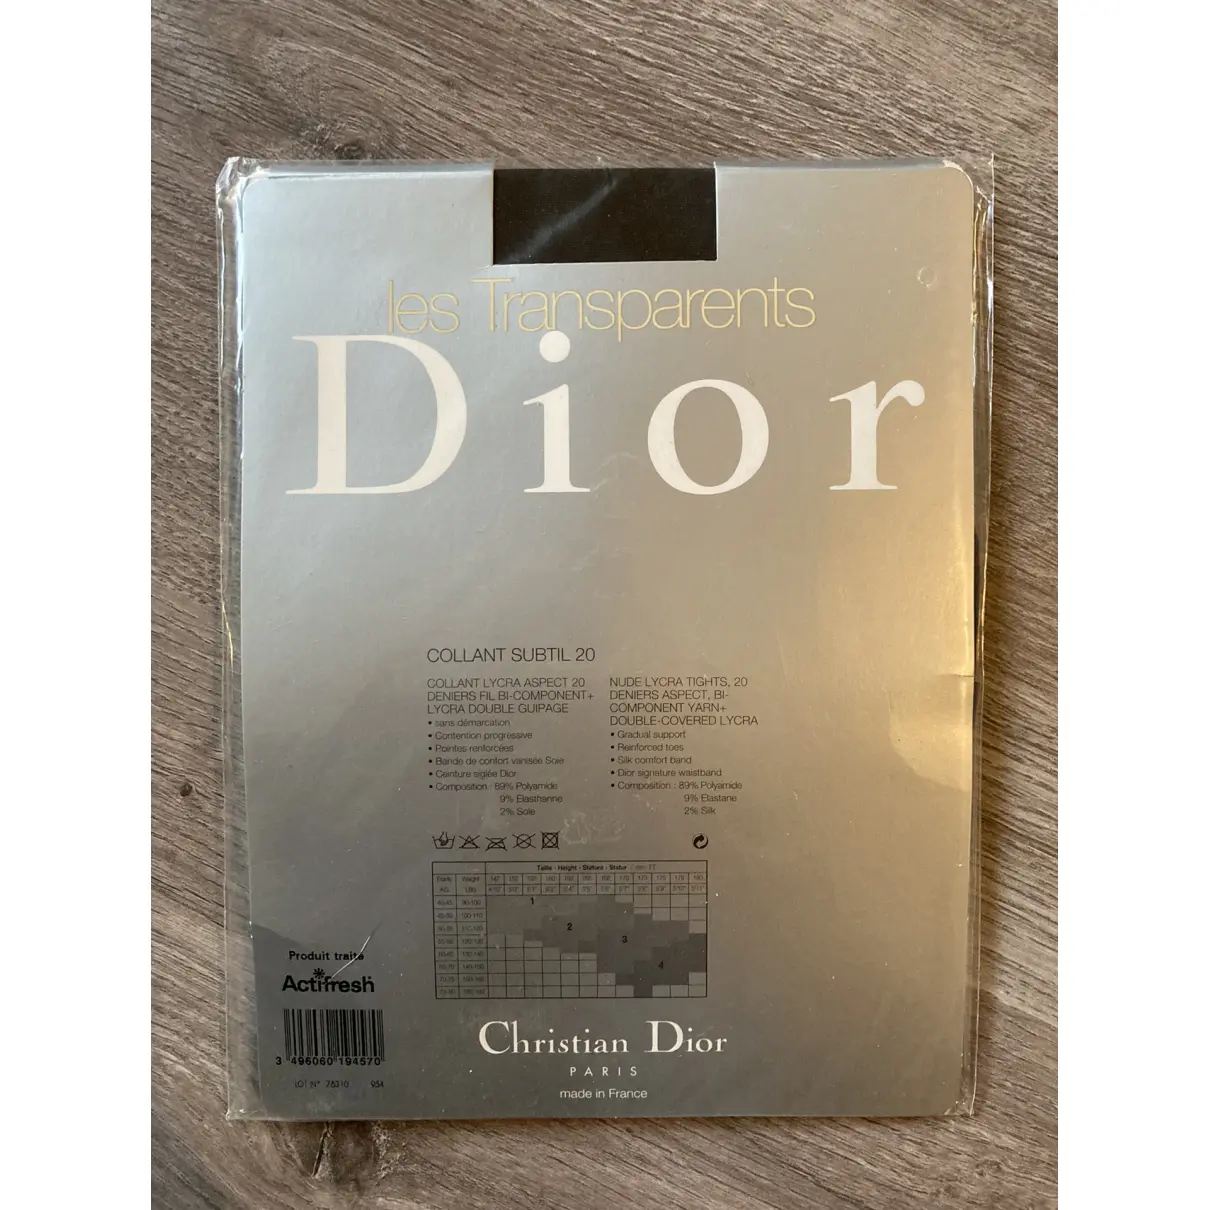 Buy Dior Tight online